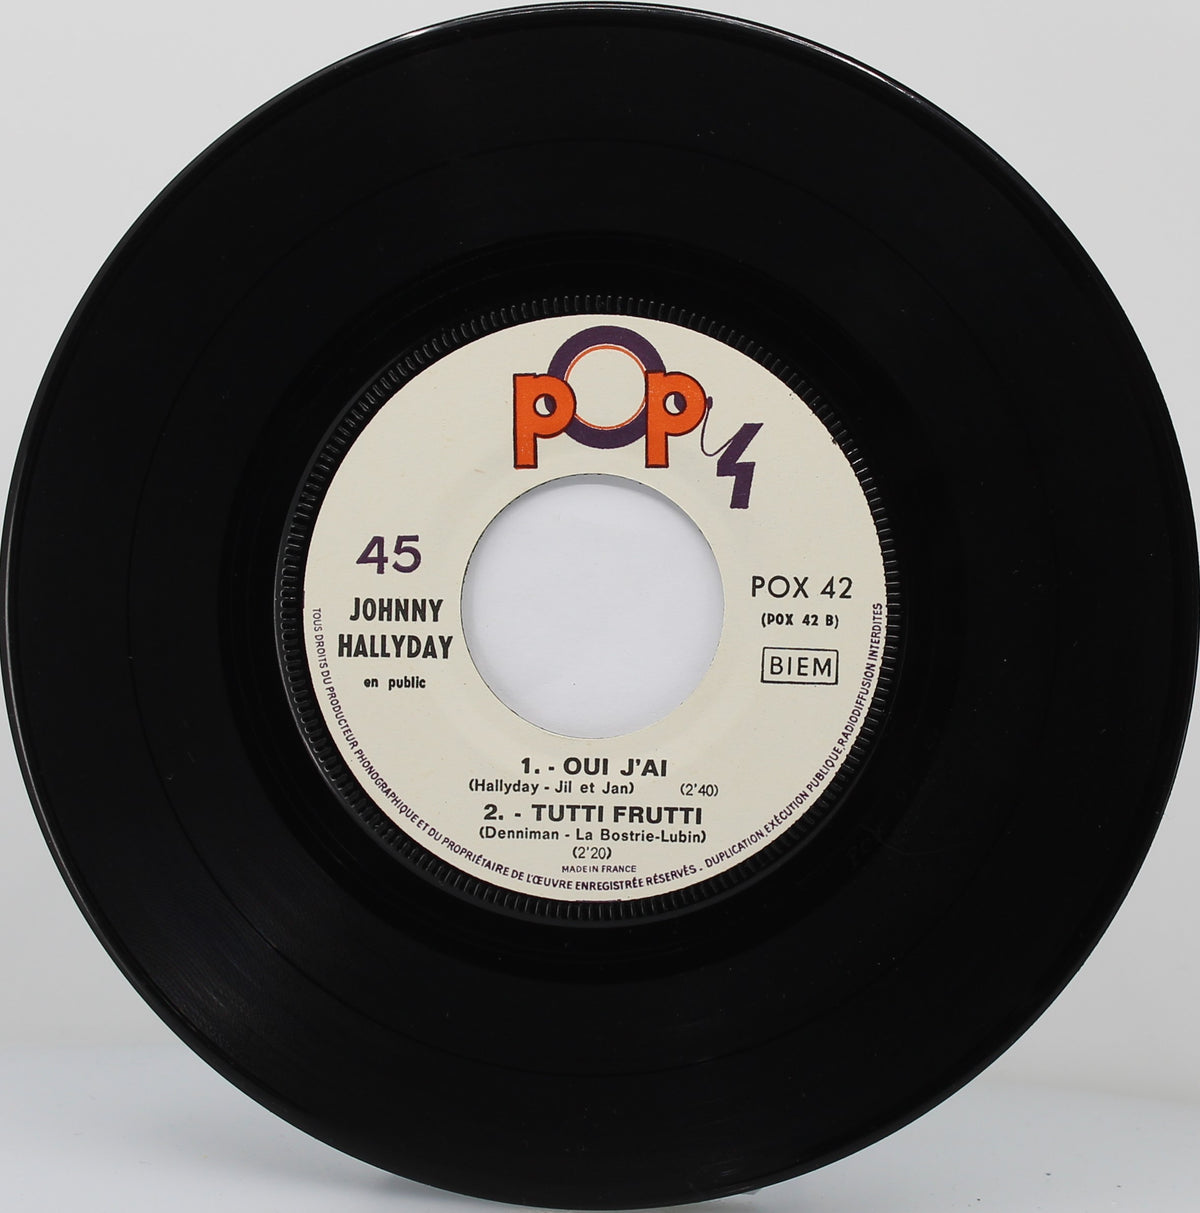 Johnny Hallyday ‎– Concert De Rock En Public, Vinyl, 7&quot;, 45 RPM, EP, France 1967